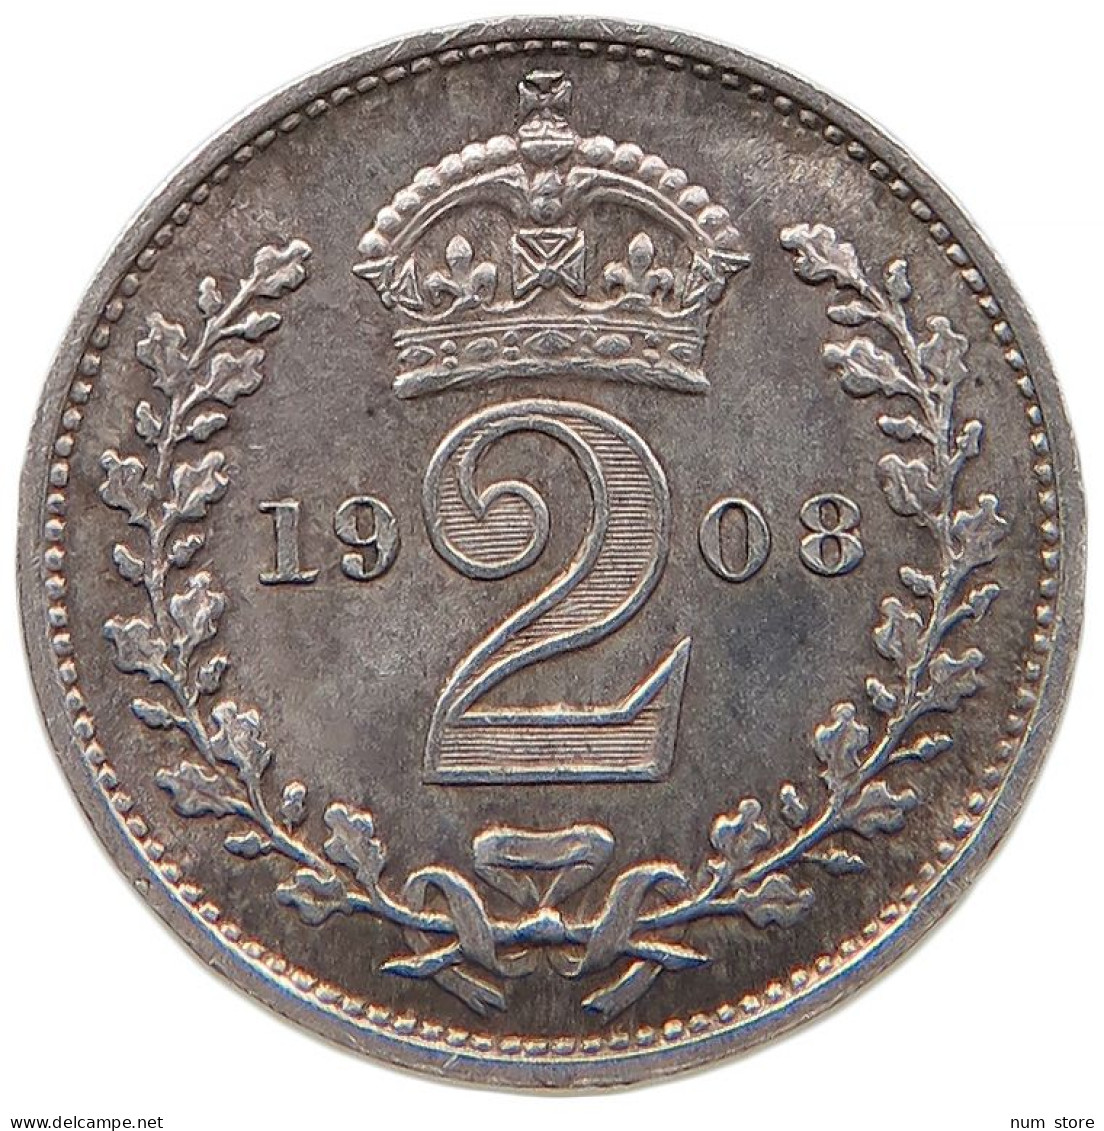 GREAT BRITAIN 2 PENCE MAUNDY 1908 Edward VII., 1901 - 1910 #t021 0105 - E. 2 Pence